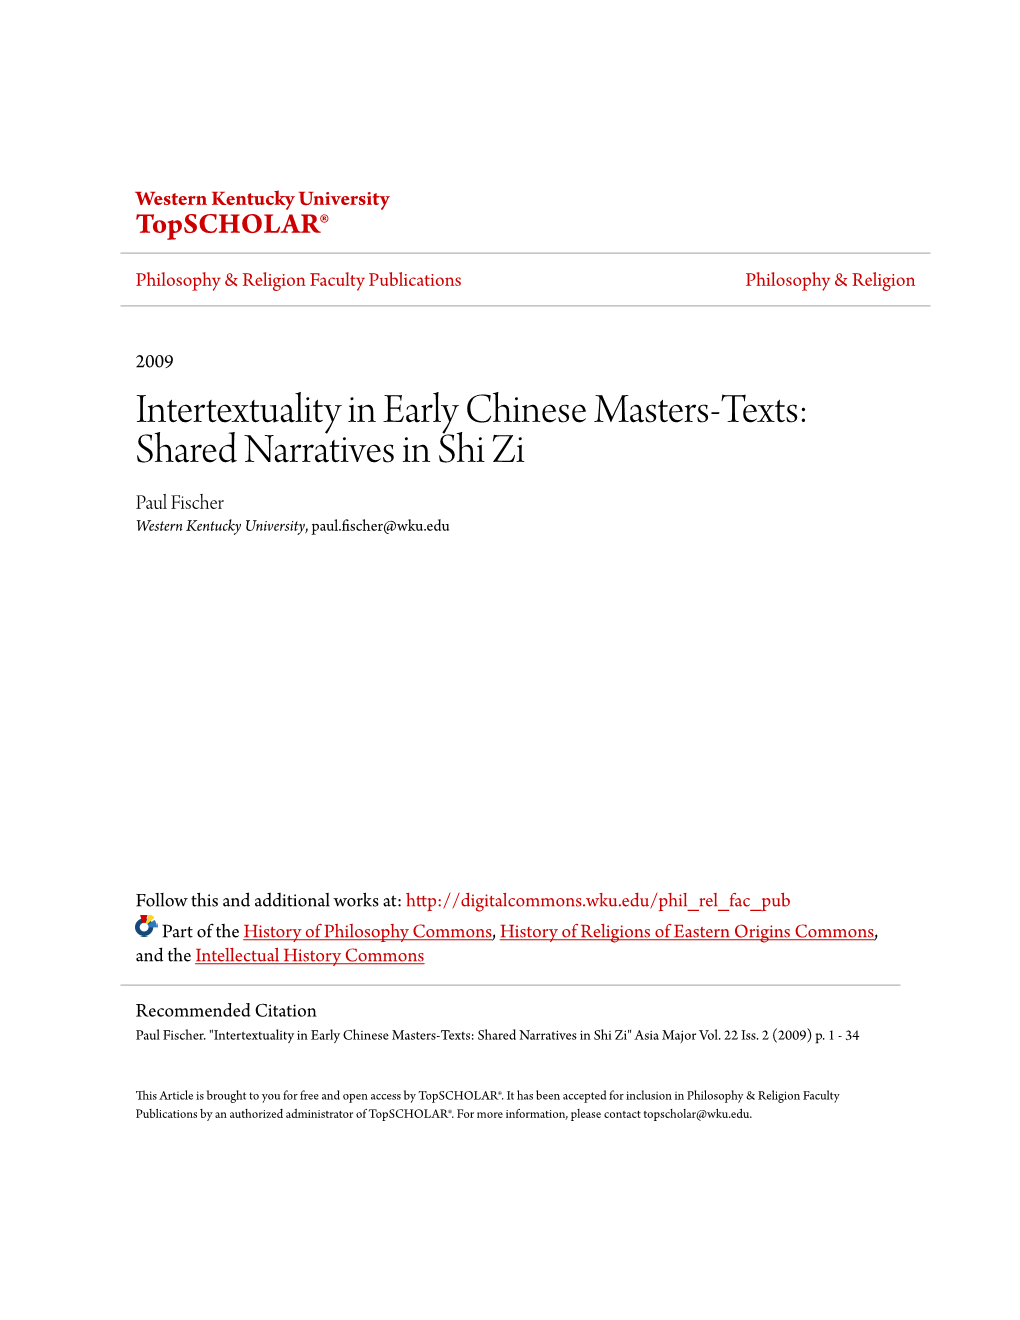 Intertextuality in Early Chinese Masters-Texts: Shared Narratives in Shi Zi Paul Fischer Western Kentucky University, Paul.Fischer@Wku.Edu